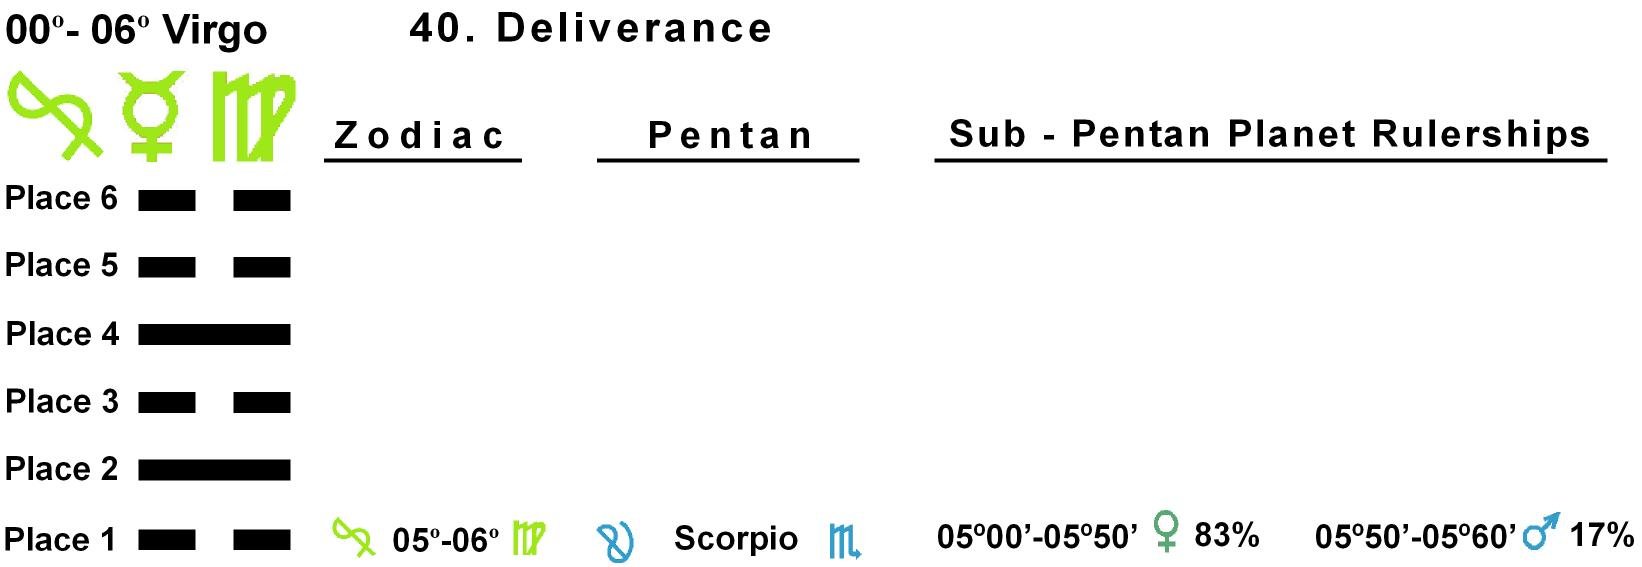 Pent-lines-06VI 05-06 Hx-40 Deliverance